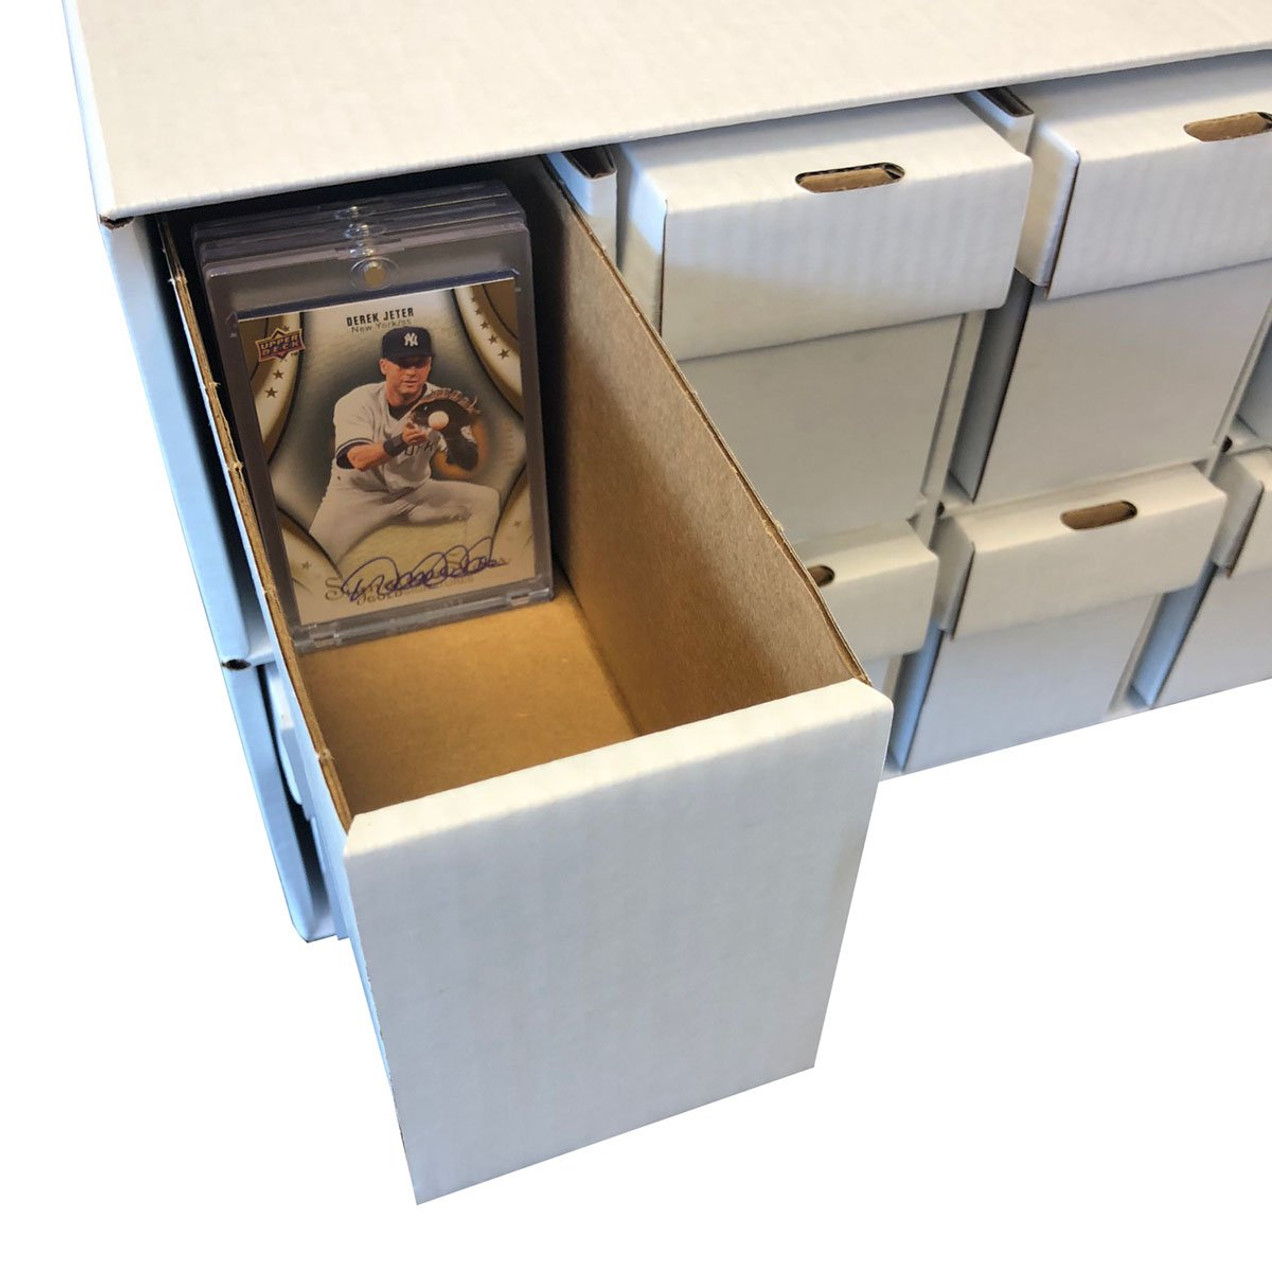 Trading Card Storage Box,Toploader Storage Box,Baseball Card